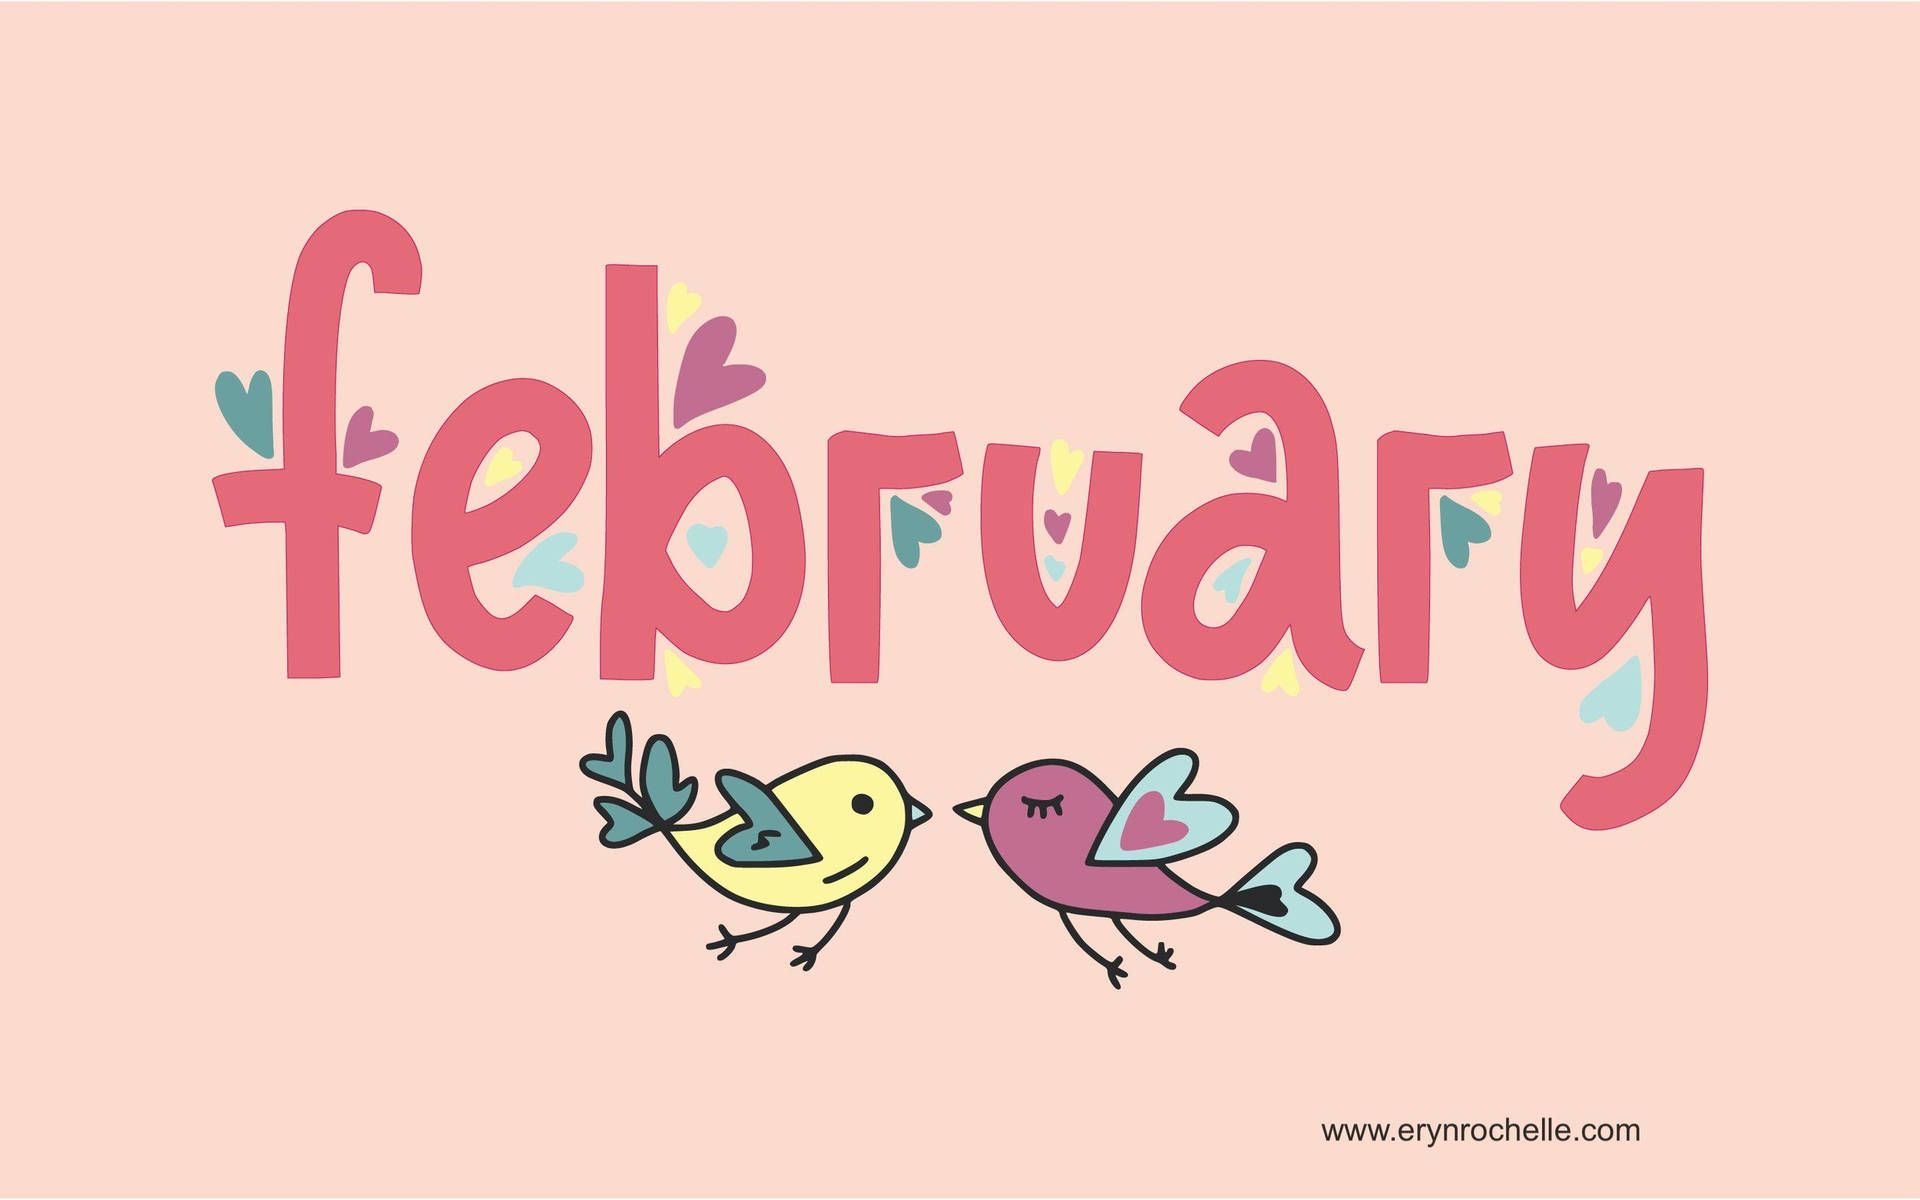 Free February Wallpaper Downloads, February Wallpaper for FREE